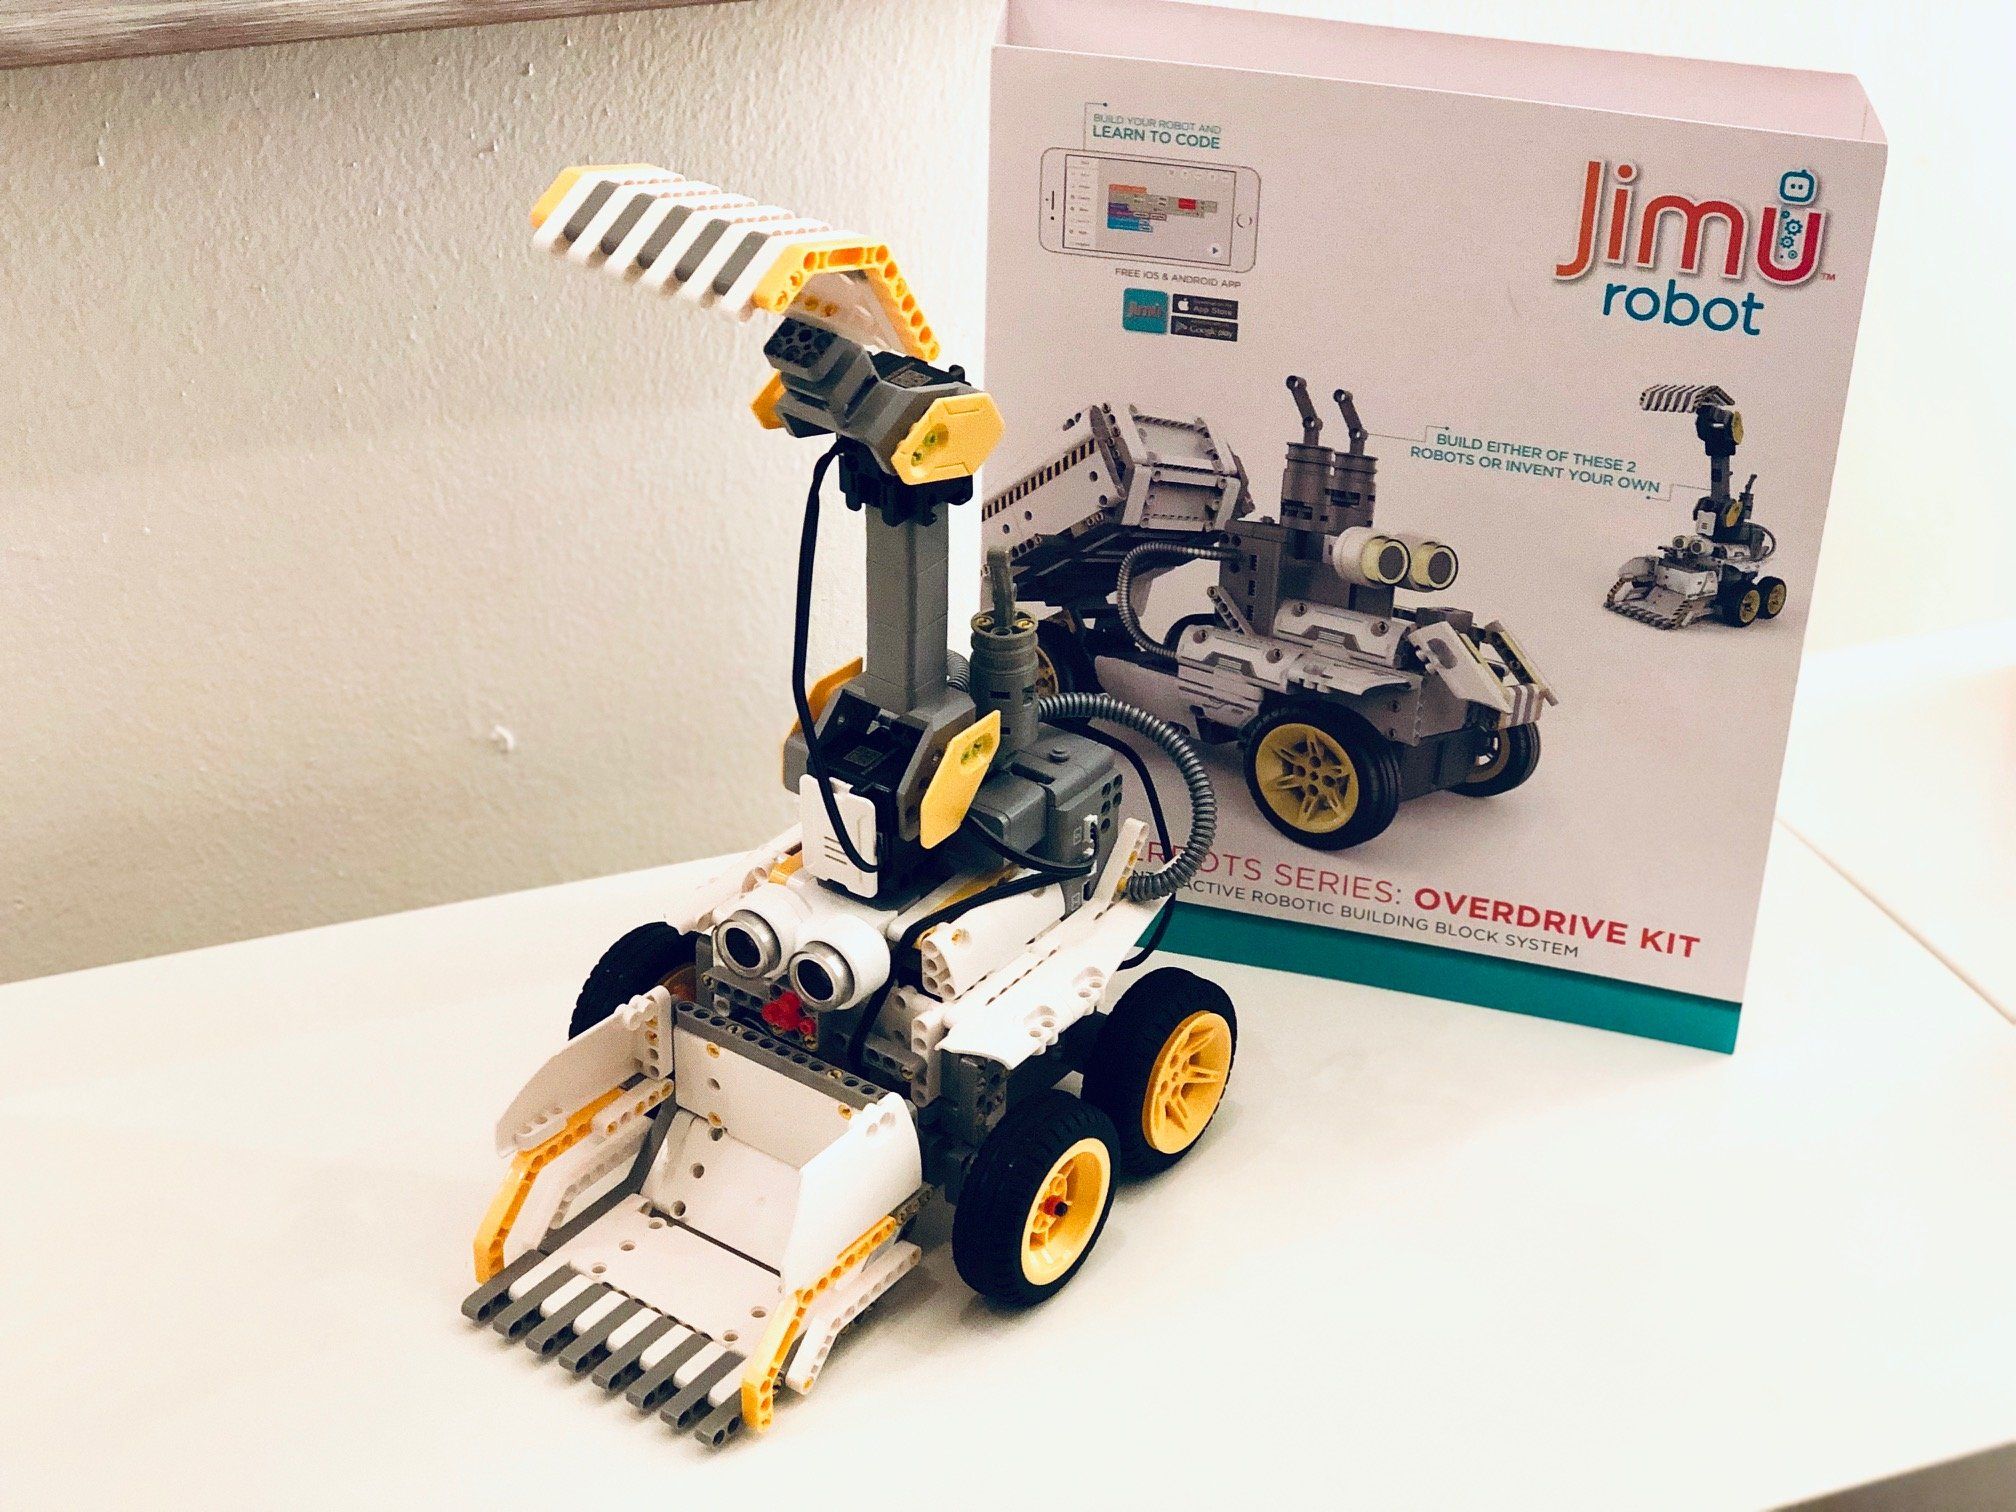 Overdrive Kit US Jimu Robot BuilderBots Series 